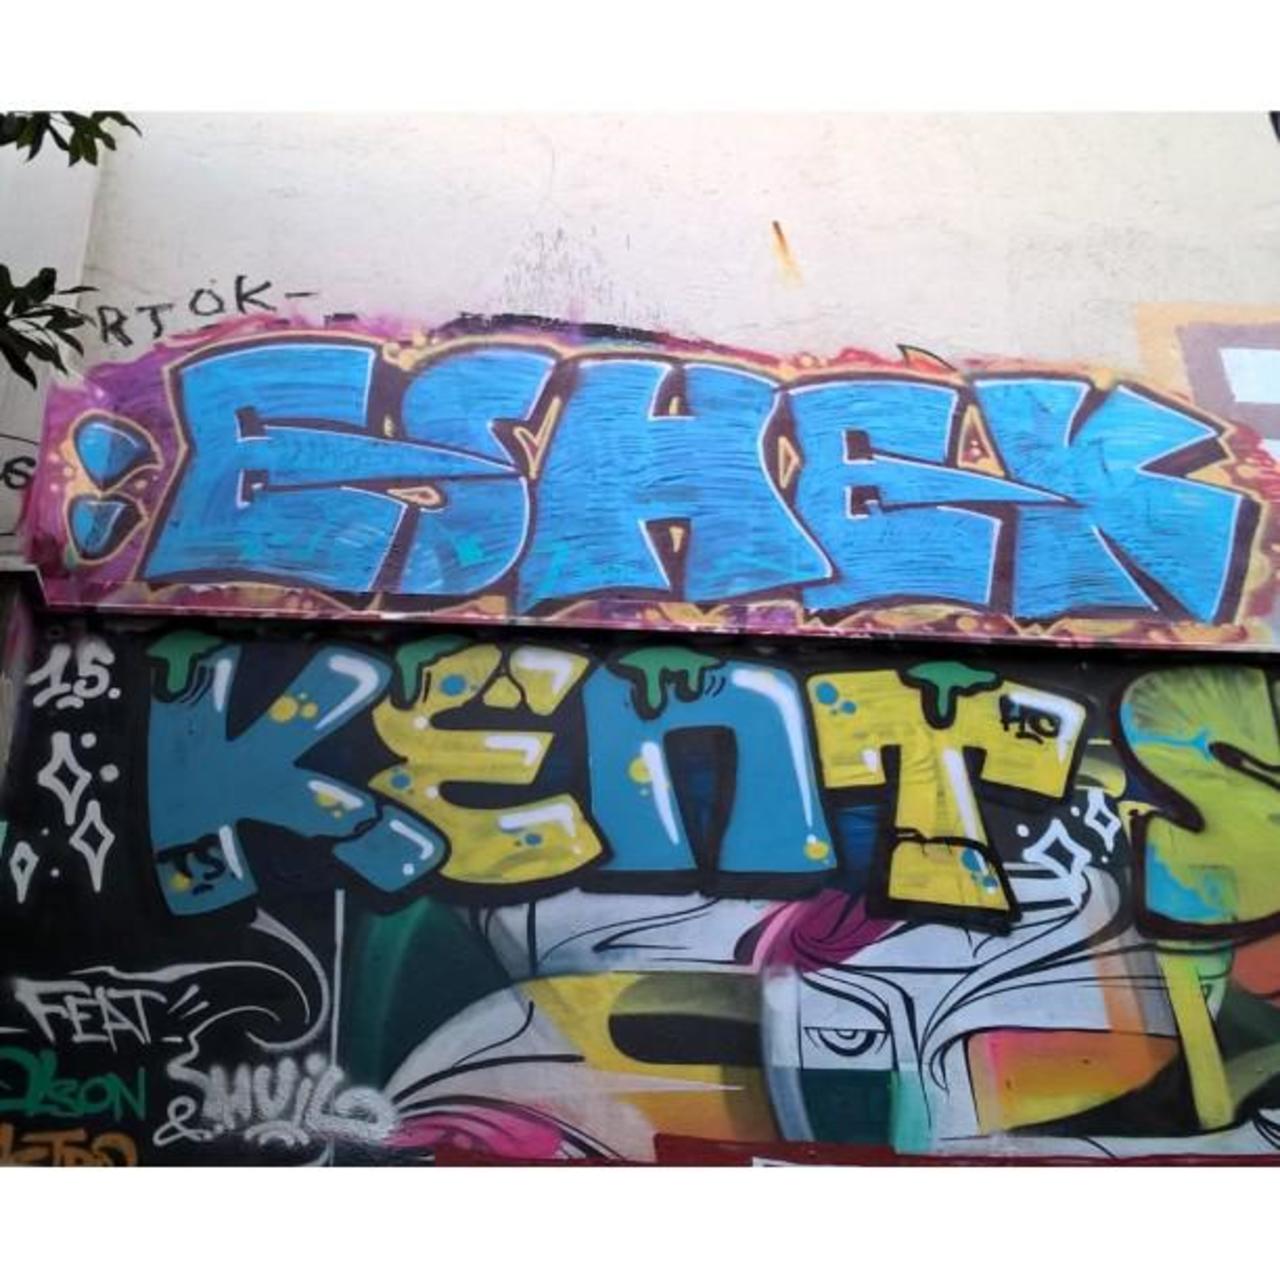 #Paris #graffiti photo by @maxdimontemarciano http://ift.tt/1QKtaeT #StreetArt http://t.co/fvVhk4MeTp